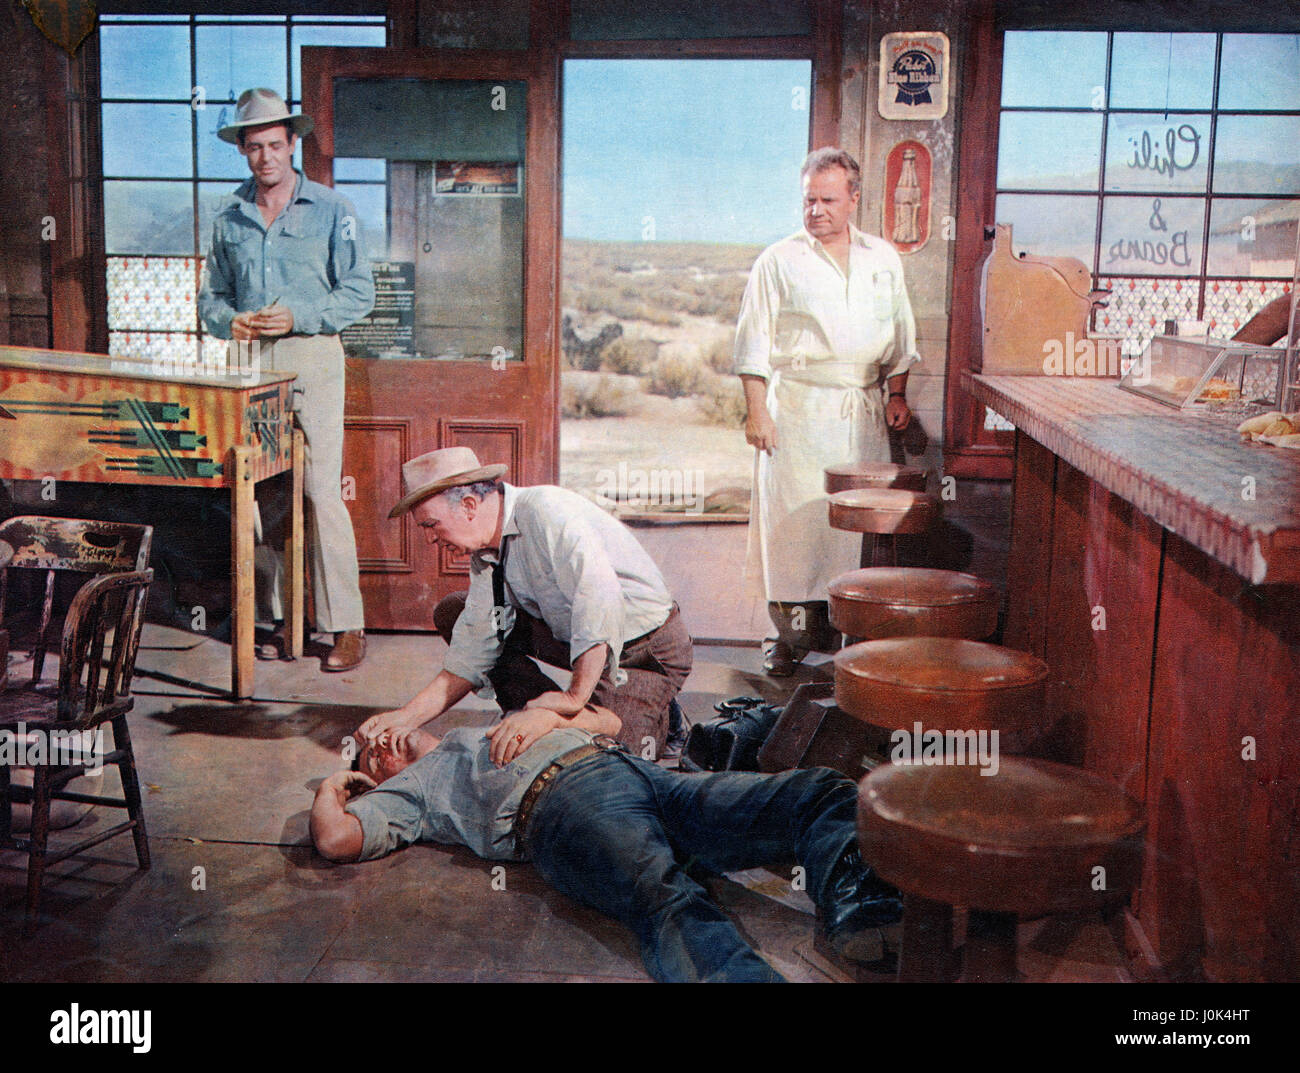 Stadt in Angst aka. Bad Day at Black Rock, USA 1955 Regie: John Sturges Darsteller: Spencer Tracy, Robert Ryan, Anne Francis Stock Photo